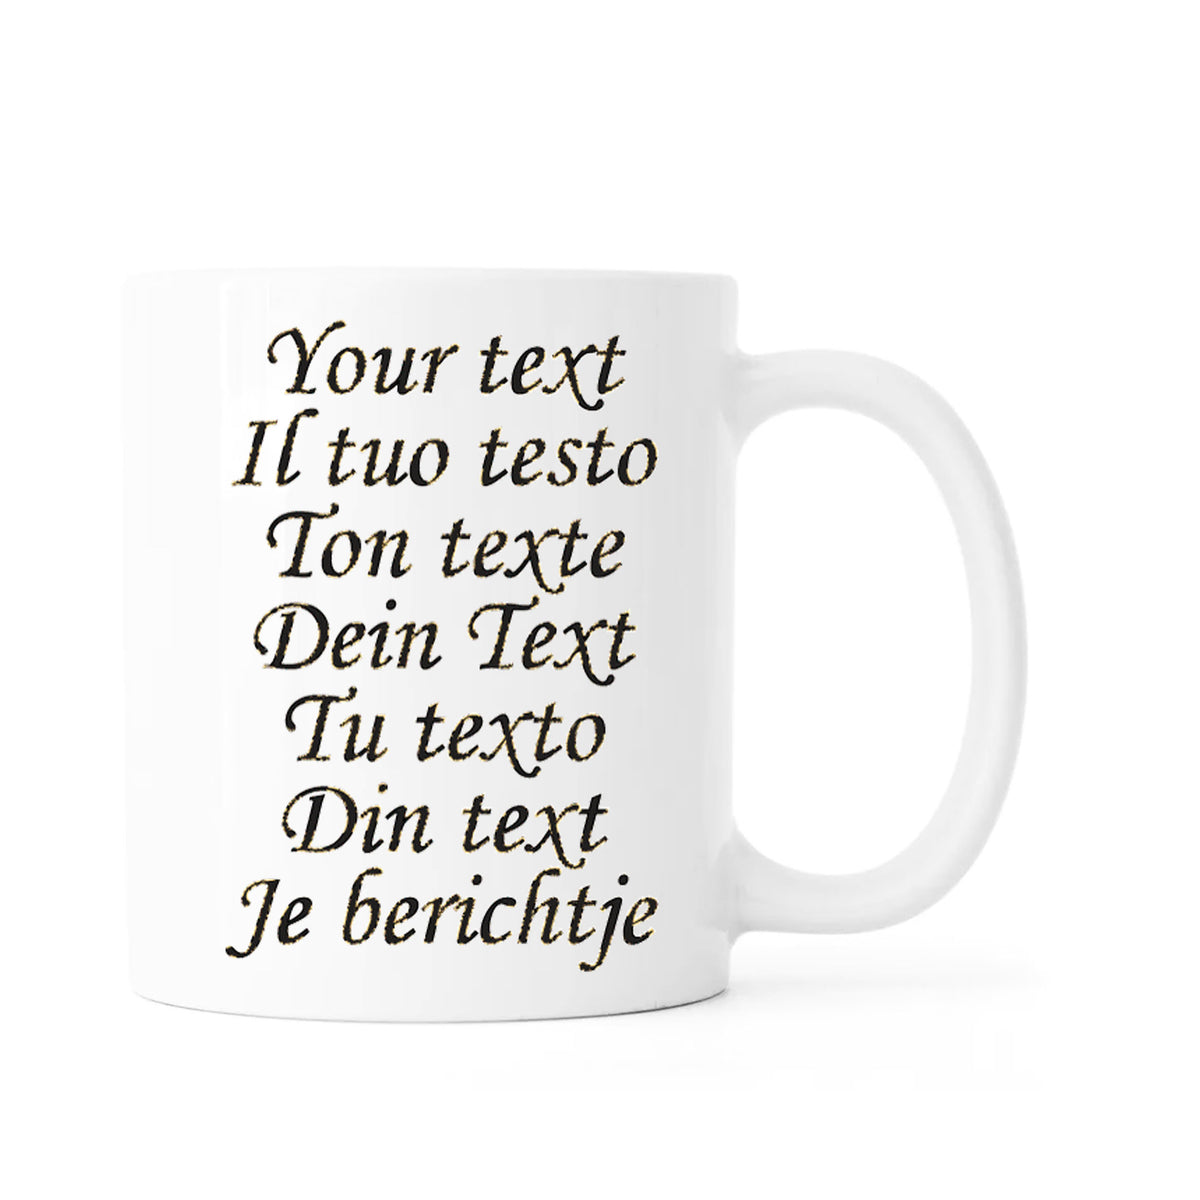 Personalised mug, photo and text, ceramic